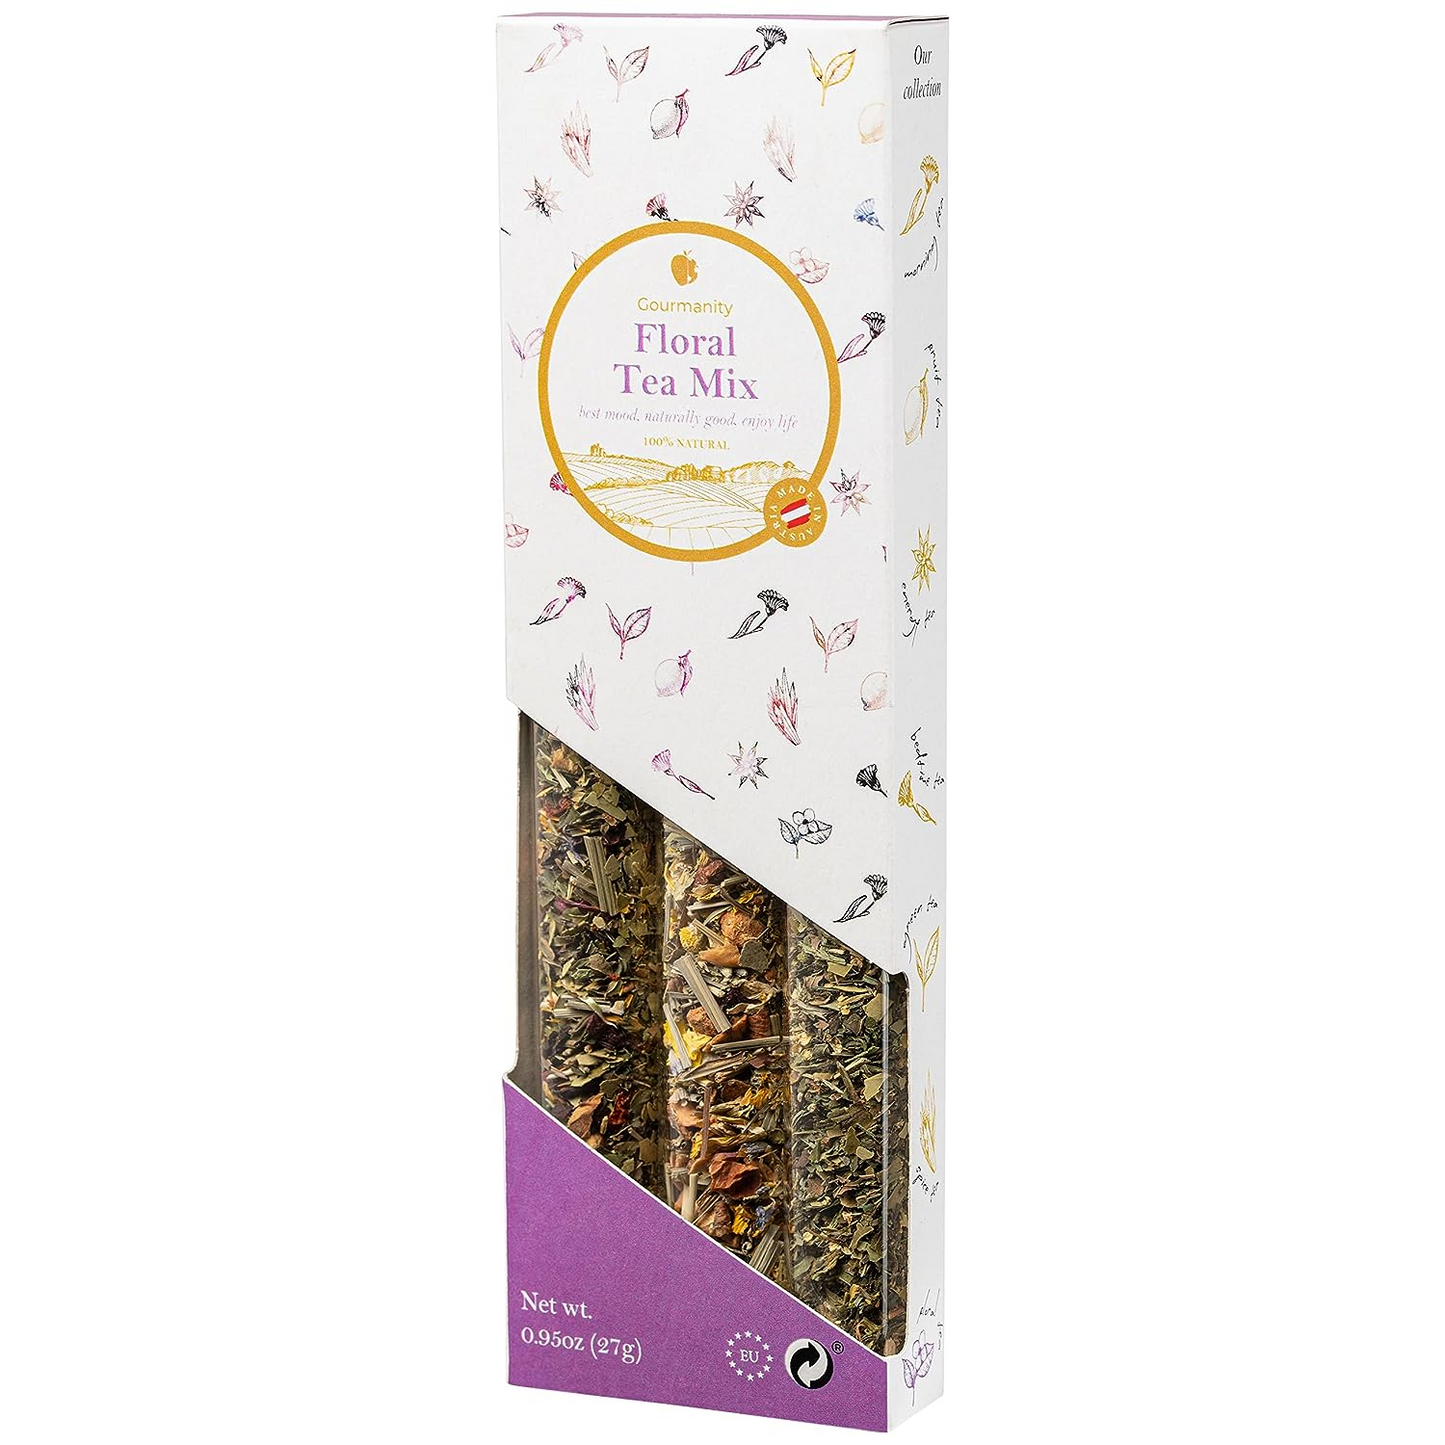 Gourmanity Tea Sampler Gift Set Floral Tea Mix 3 Flavors 0.95oz - Gourmanity